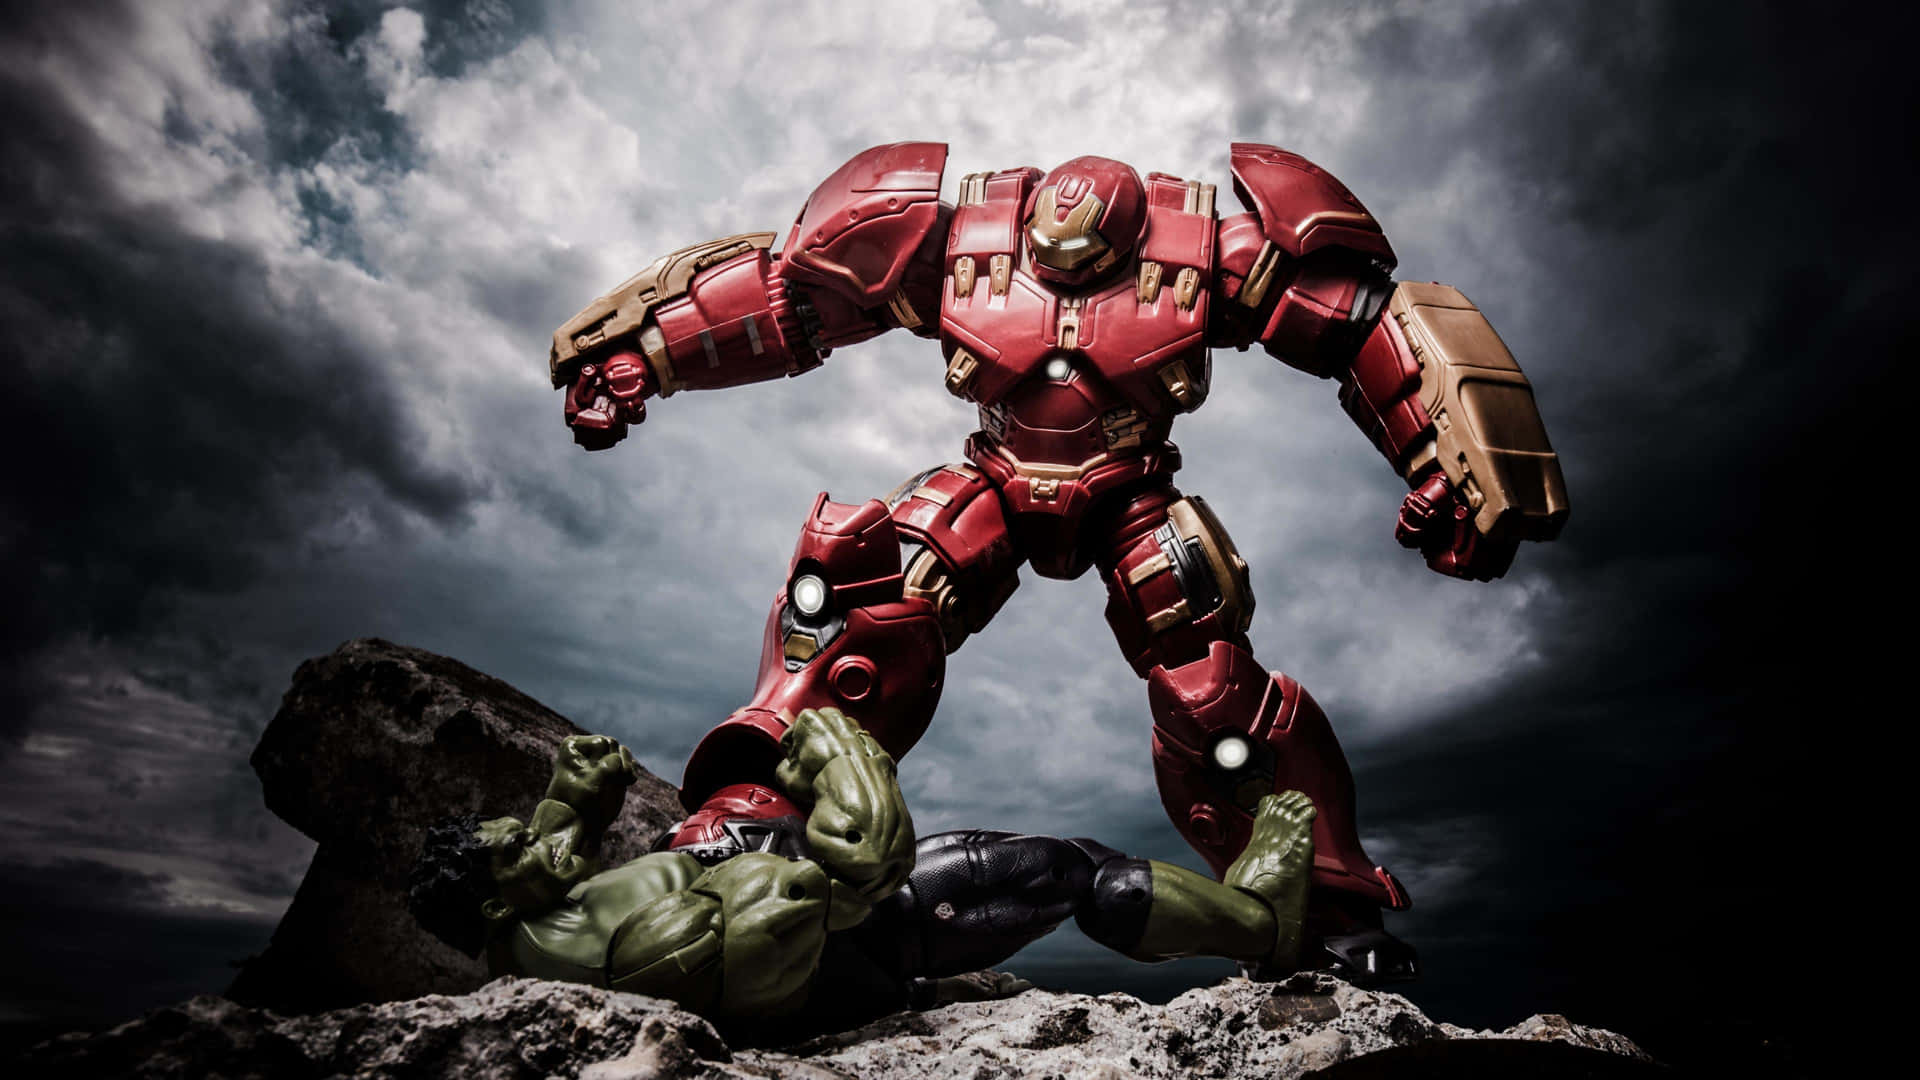 Avengers - Iron Man vs Hulk Wallpaper